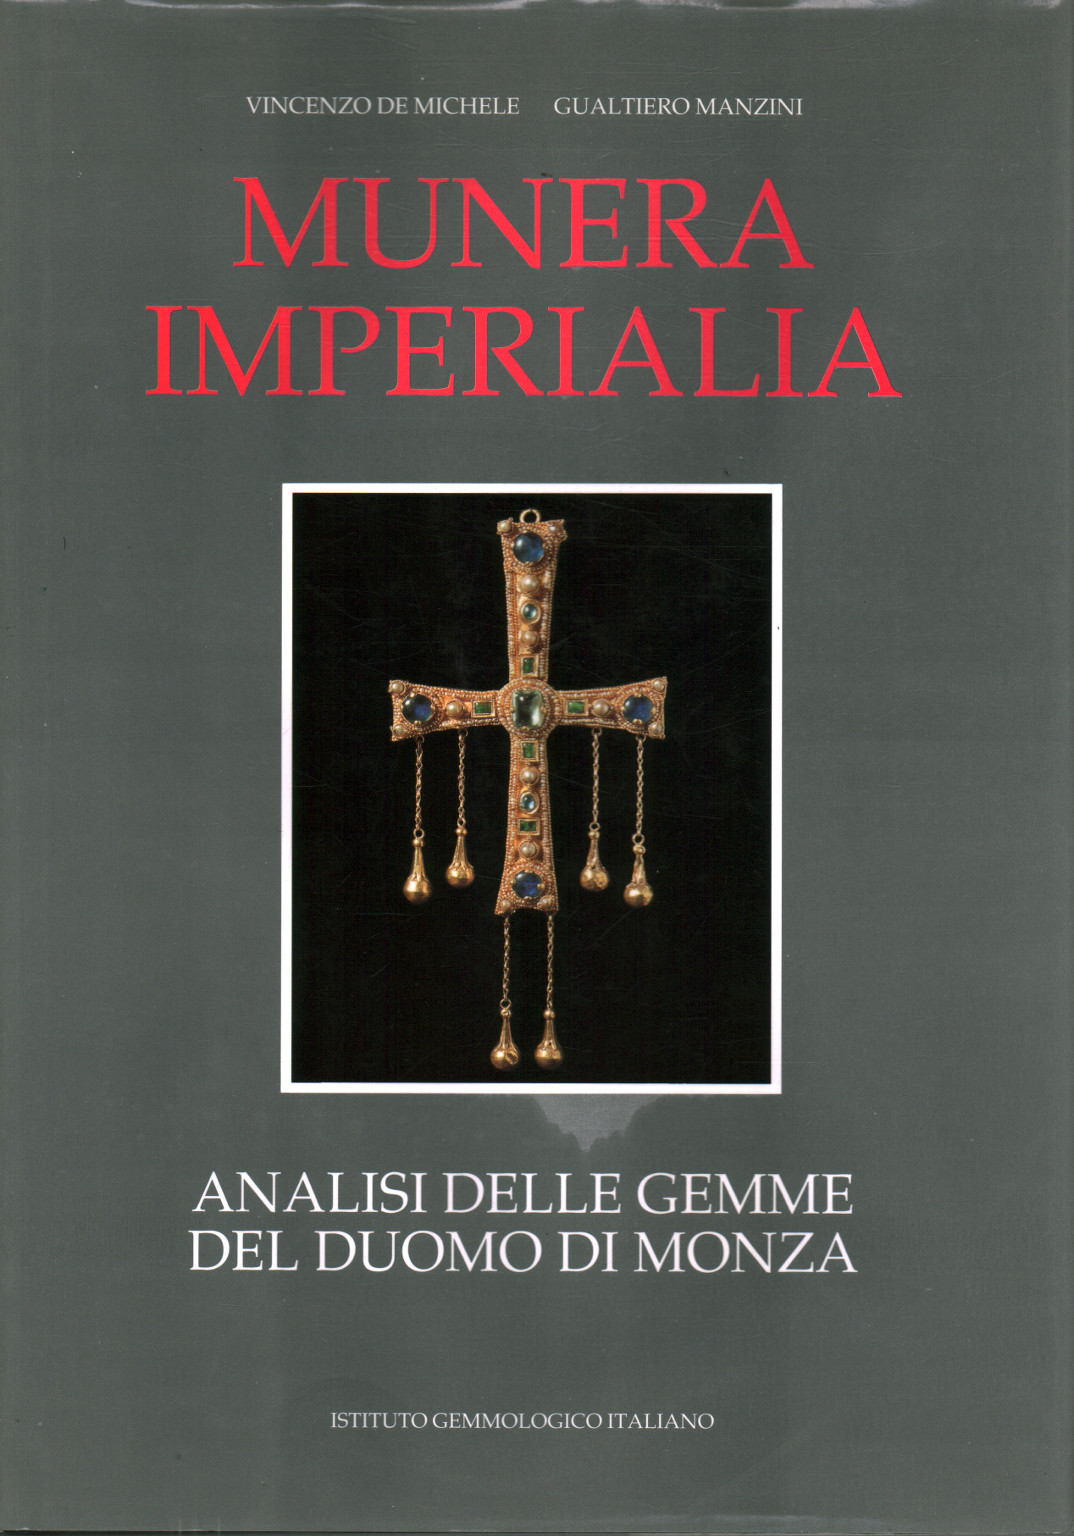 Múnera Imperialia, s.a.